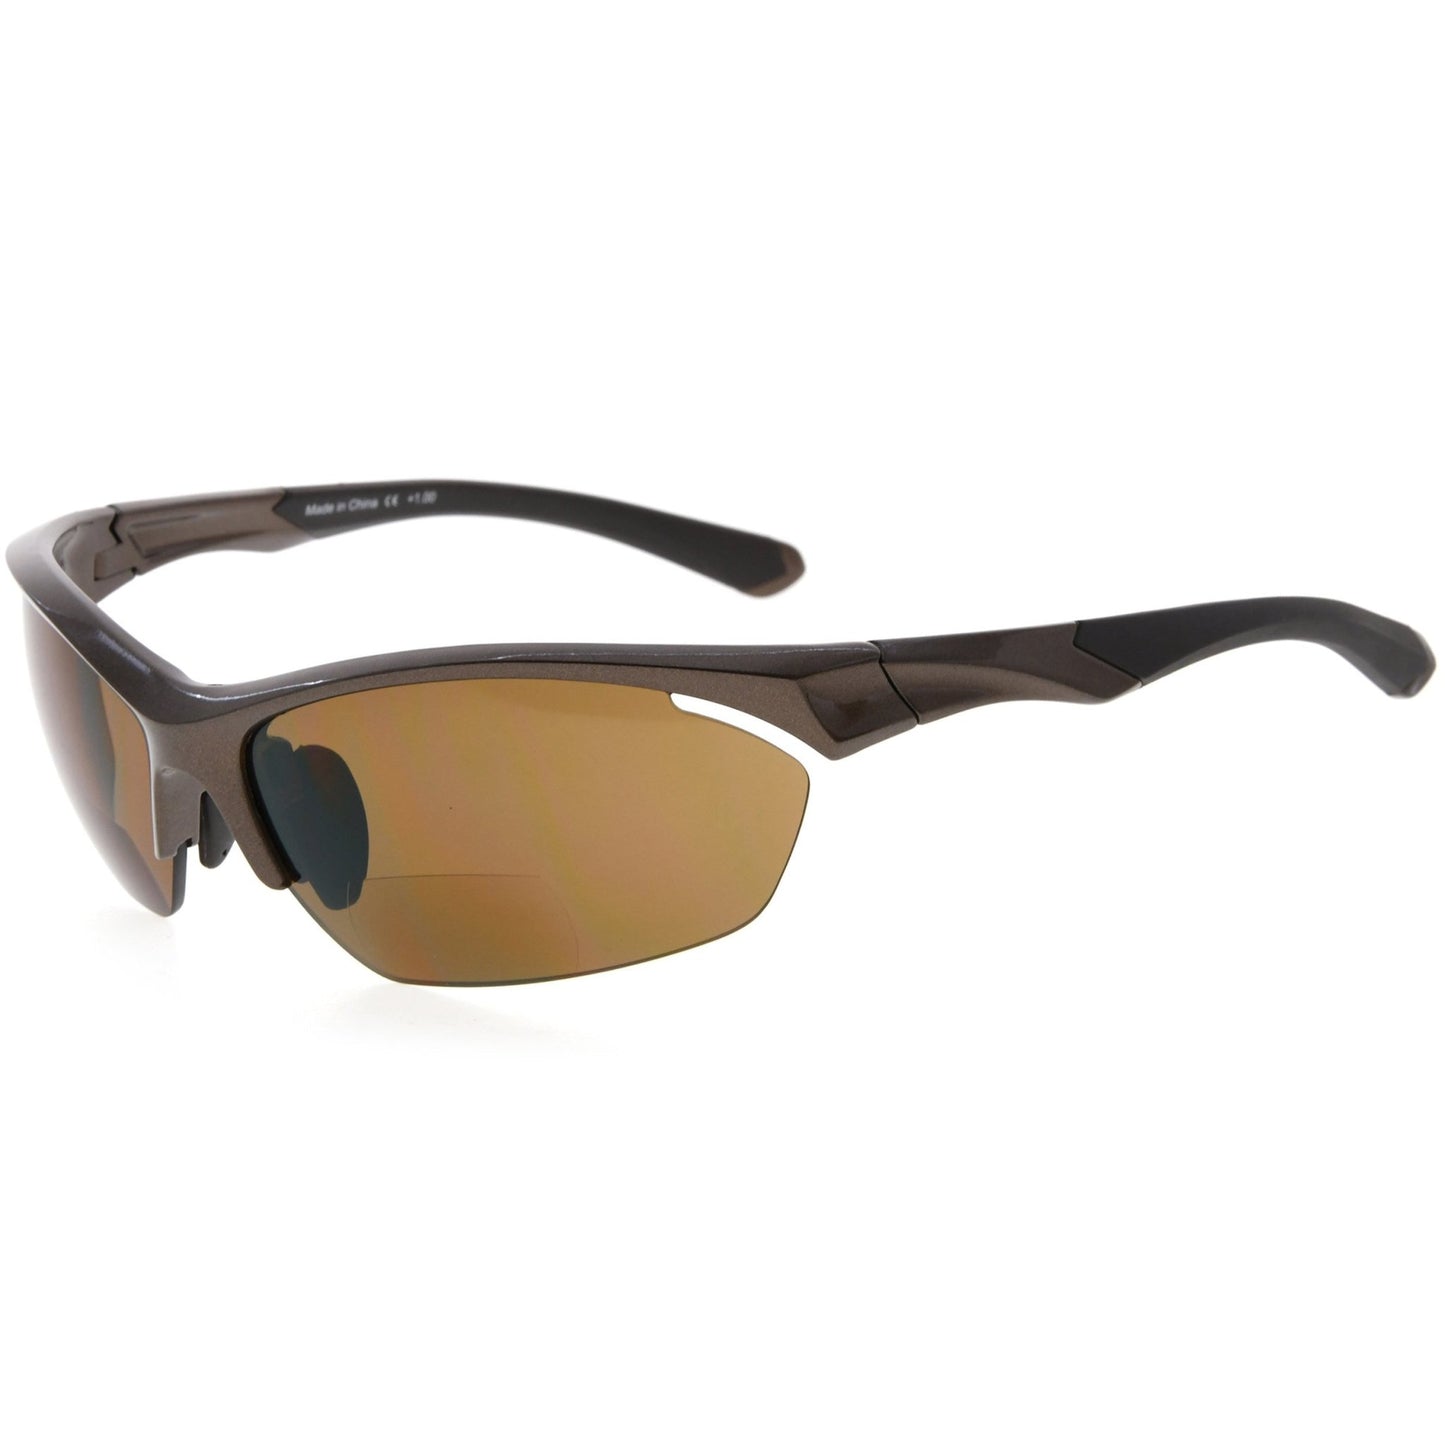 Stylish Bifocal Sunglasses Women Pearly brown SG902